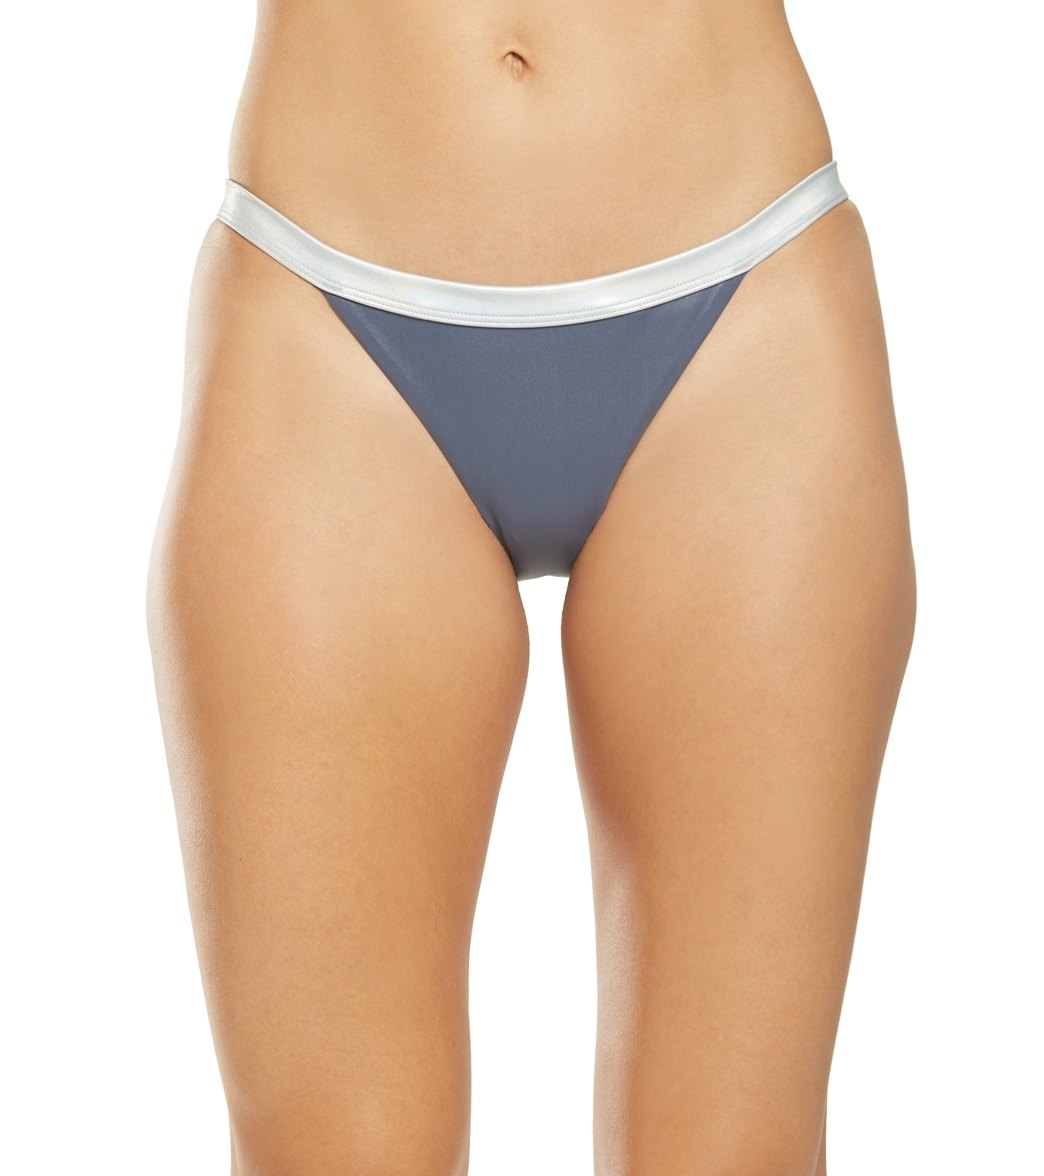 Nike Women's Flash Bikini Bottom at SwimOutlet.com